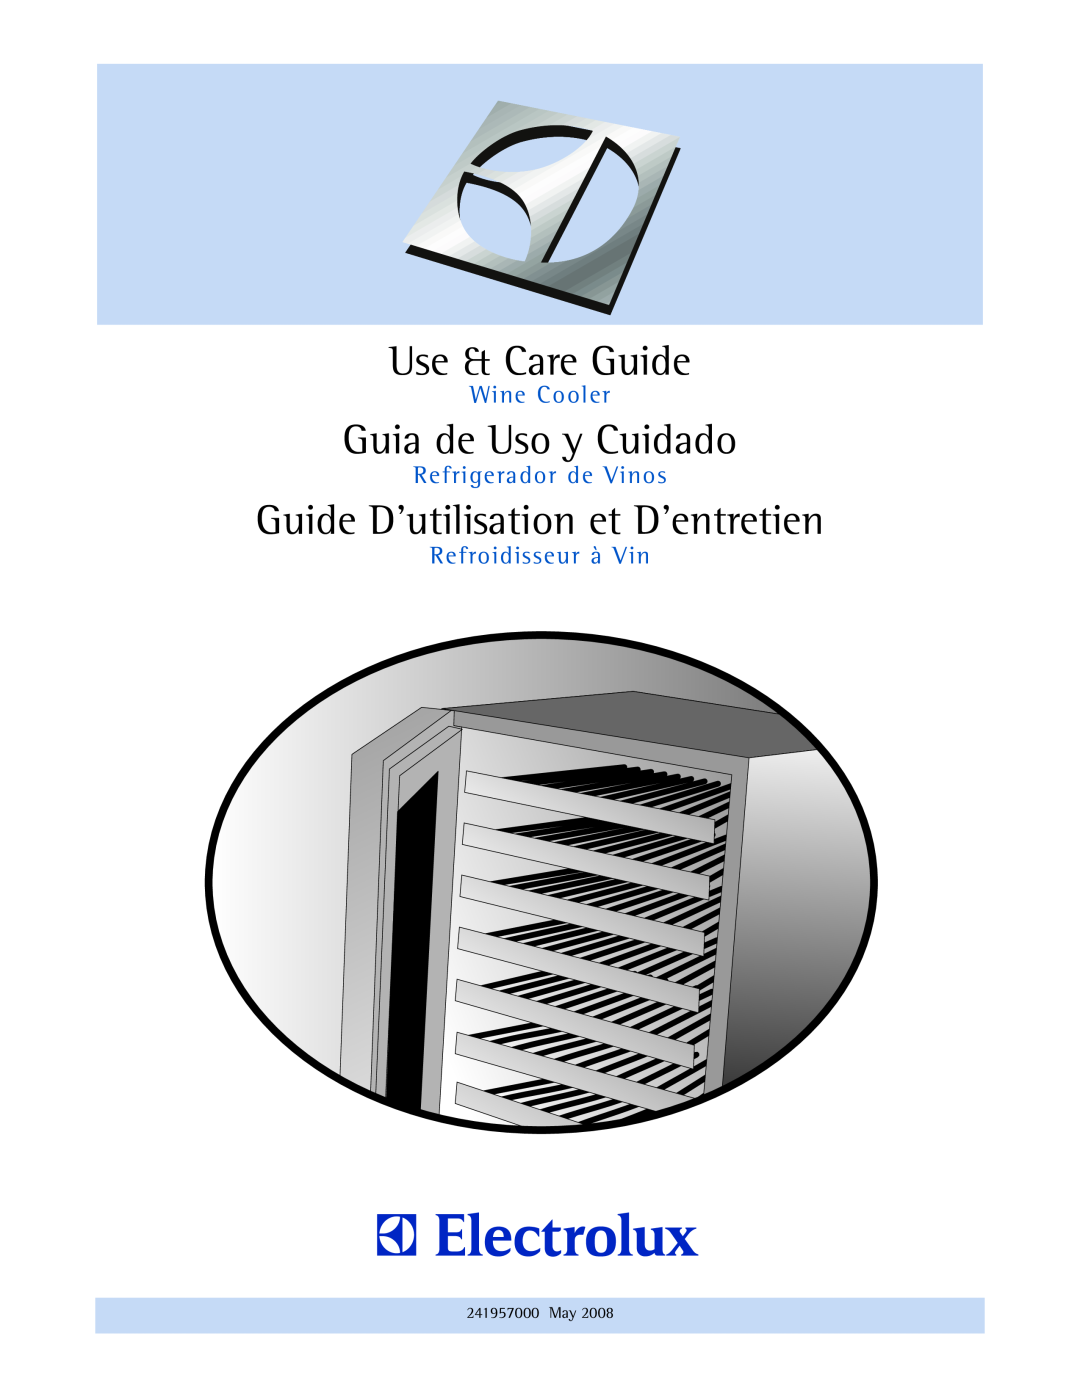 Electrolux 241957000 manual Use & Care Guide, Guia de Uso y Cuidado, Guide D’utilisation et D’entretien, Wine Cooler 